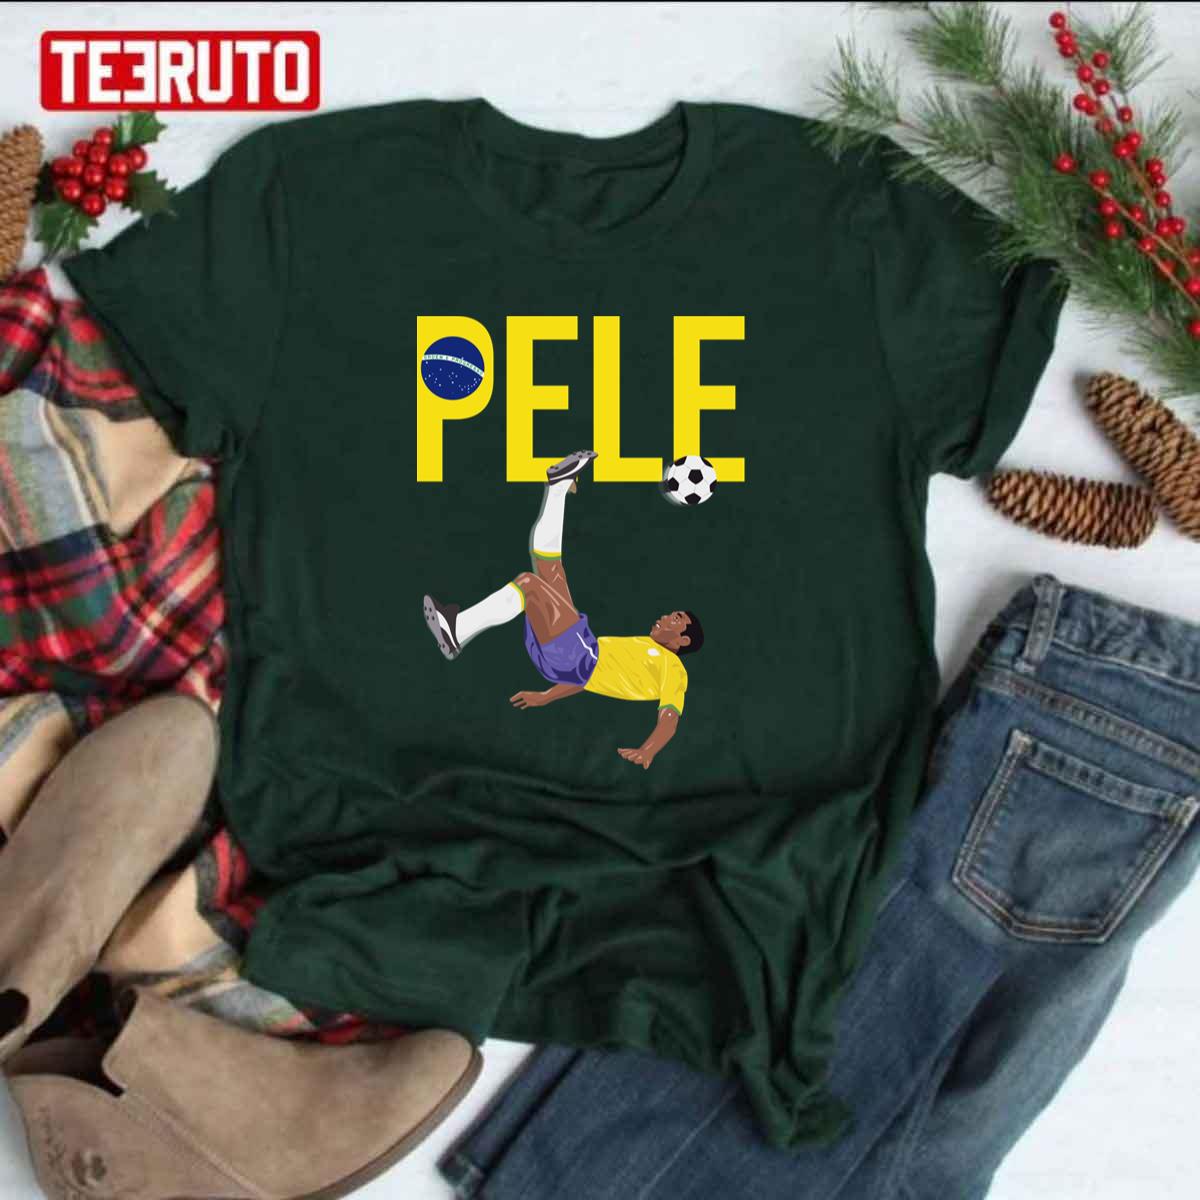 Bicycle Kick Pele Soccer Football Brazil Globe Flag Yellow Text Unisex T-Shirt